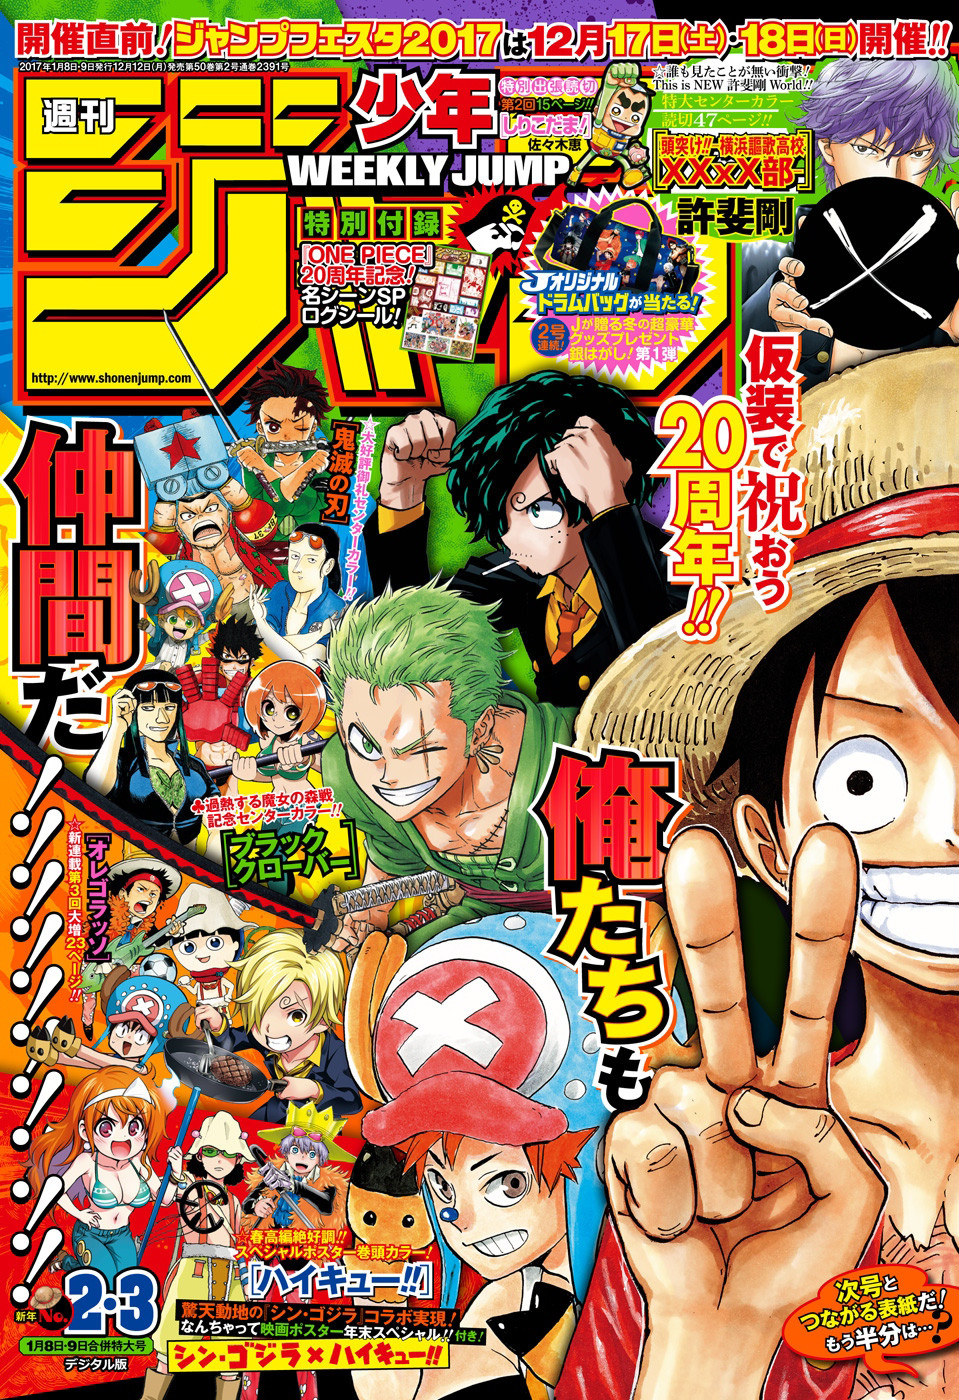 Weekly Shonen Jump Issue 2 3 17 Jump Database Fandom